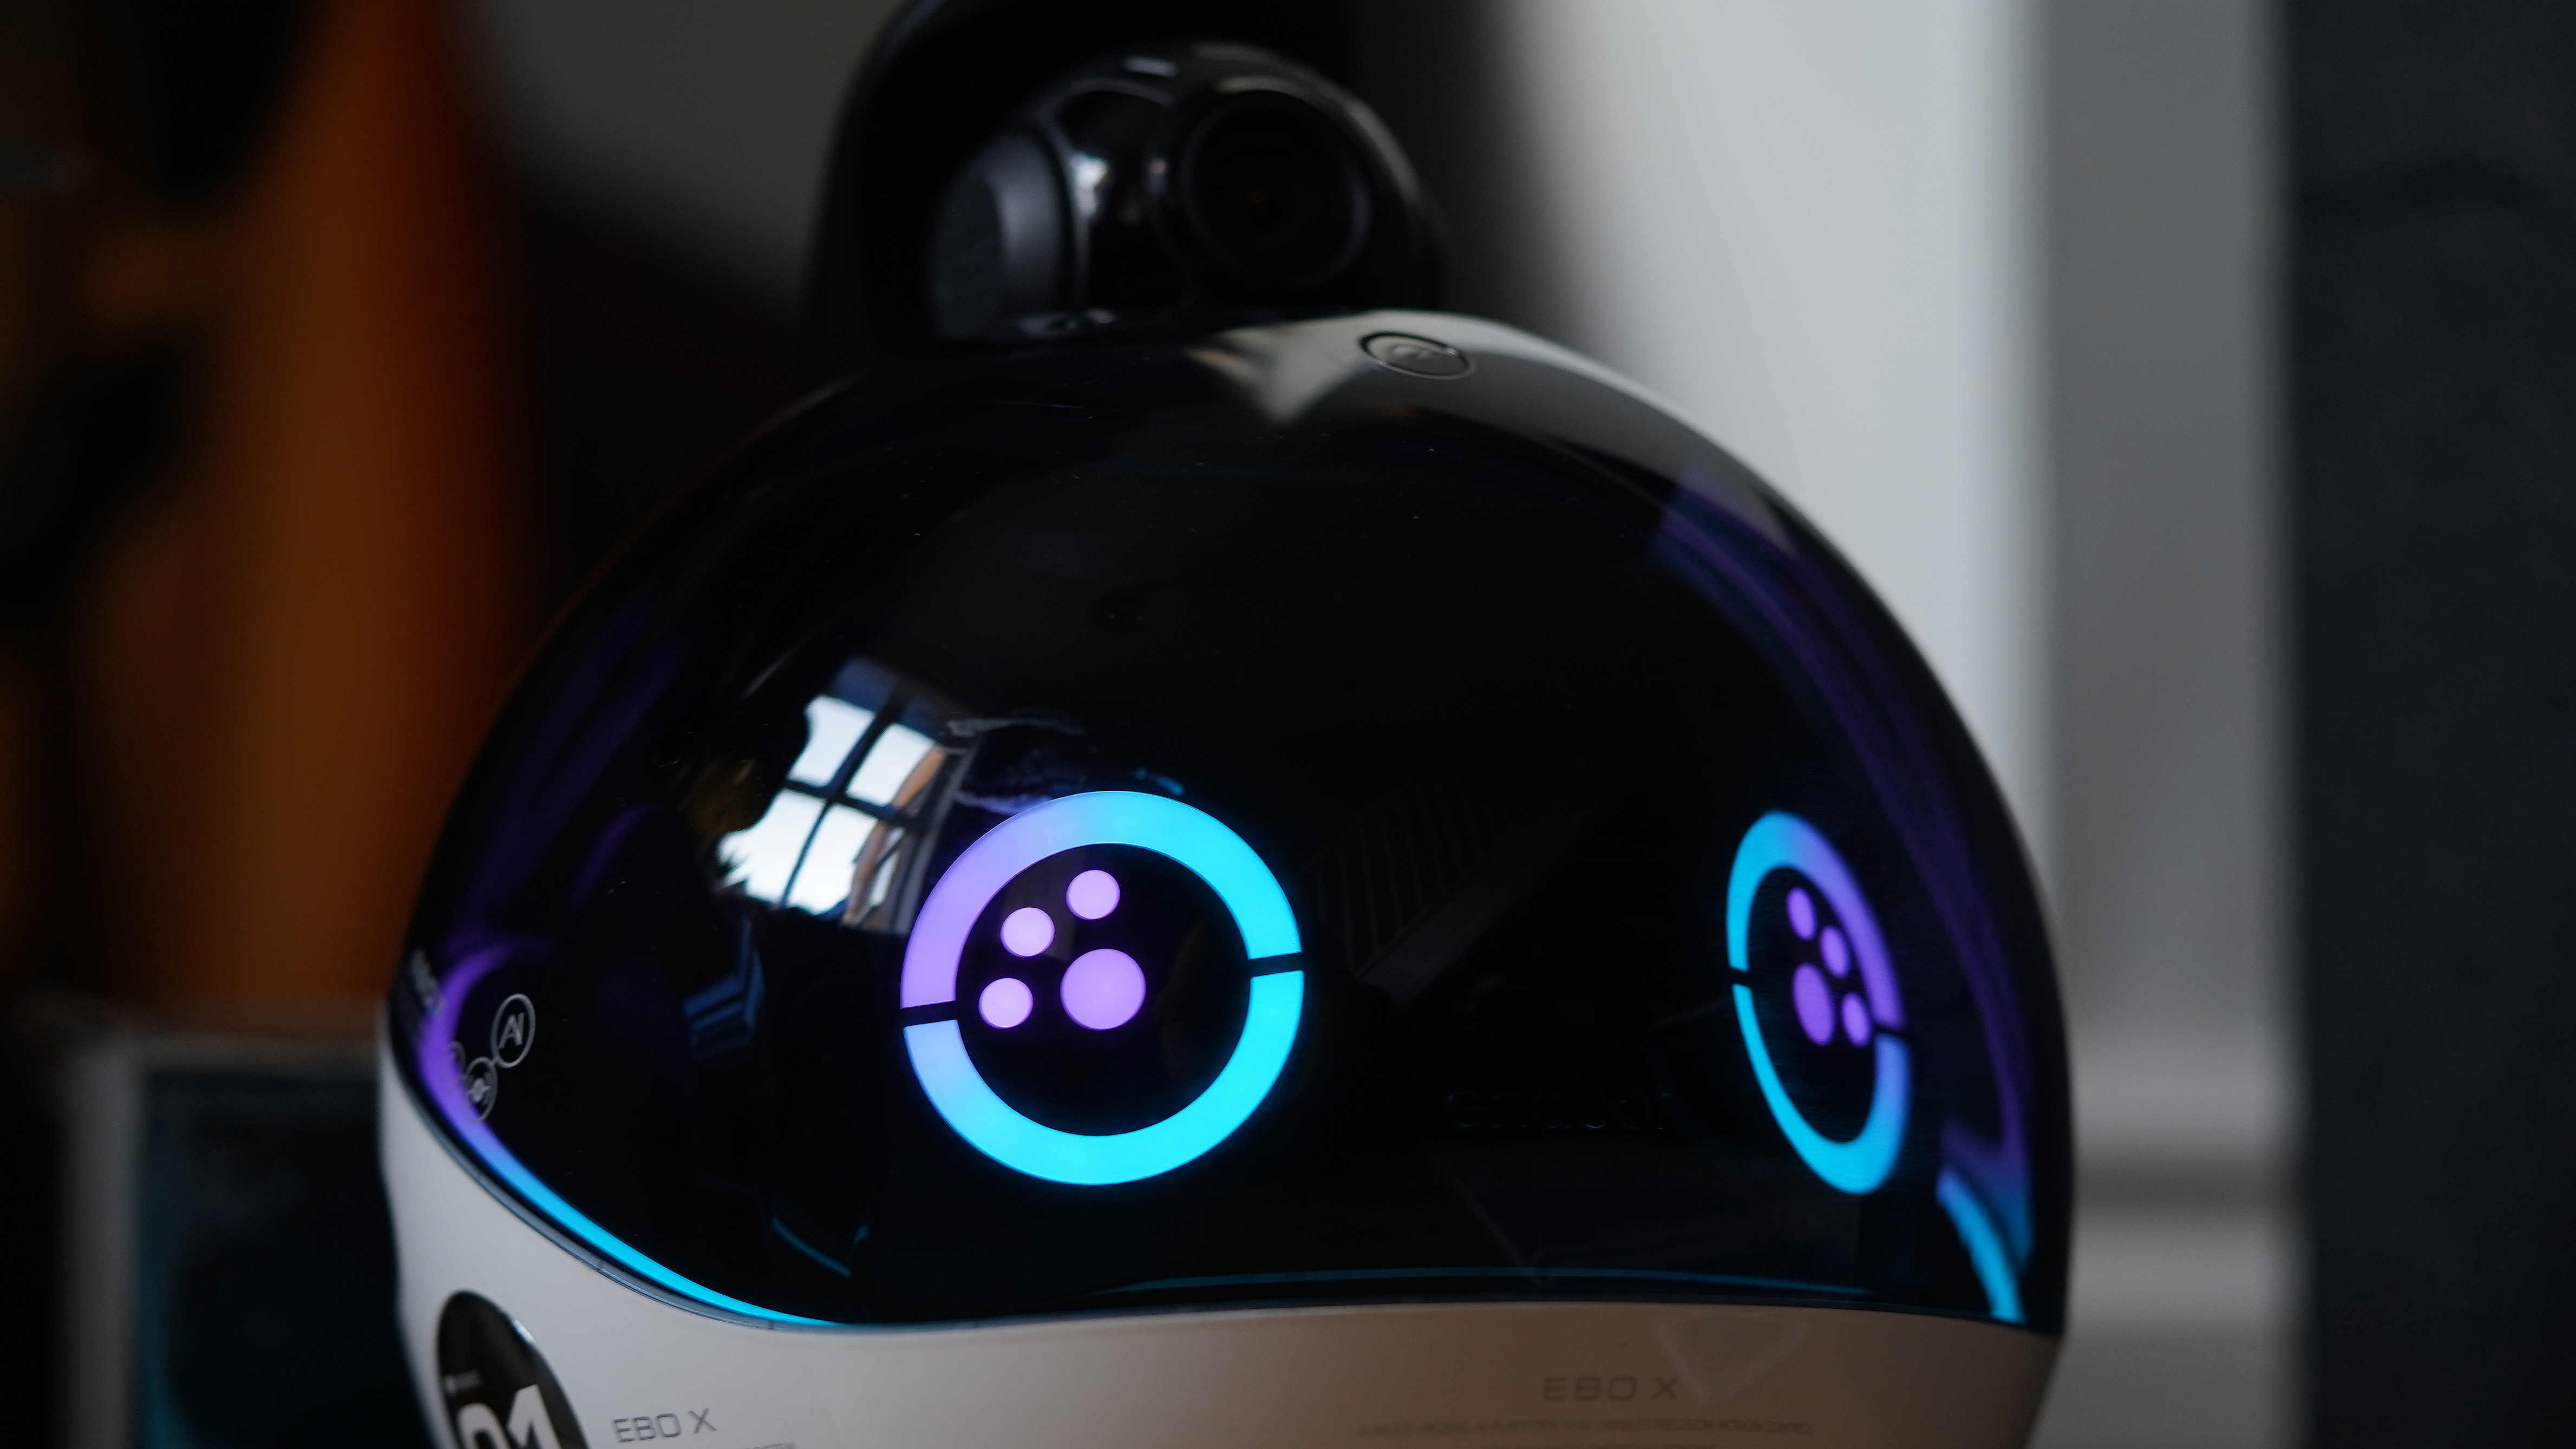 Enabot EBO X Smart Home Robot Review: Looks like a BB-8! - Gizmochina